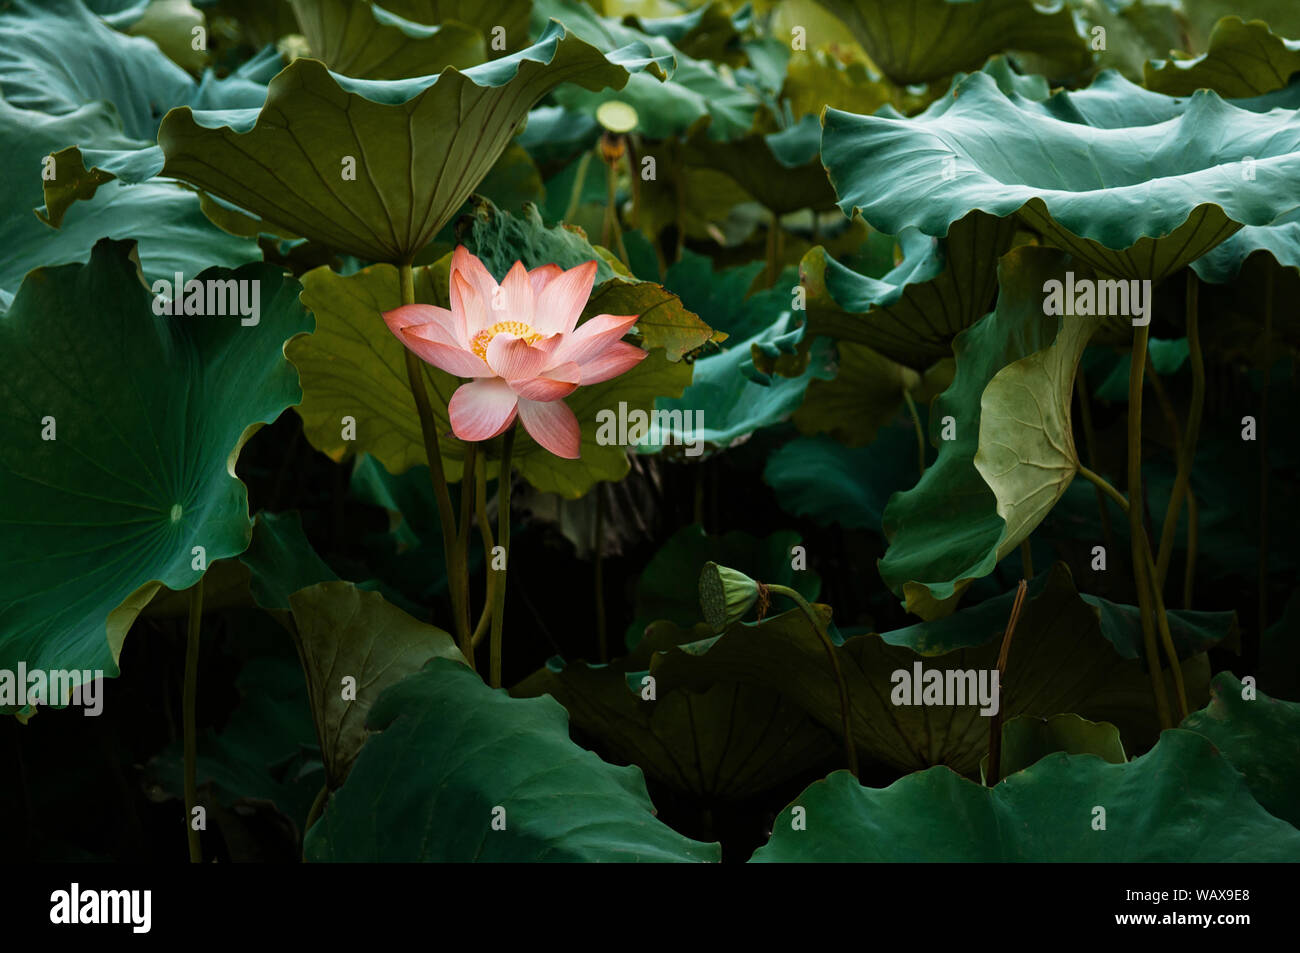 Full bloom Royal lotus flowers among green leaves in famous Summer lotus pond of West Lake. Hangzhou, Zhejiang - China Stock Photo